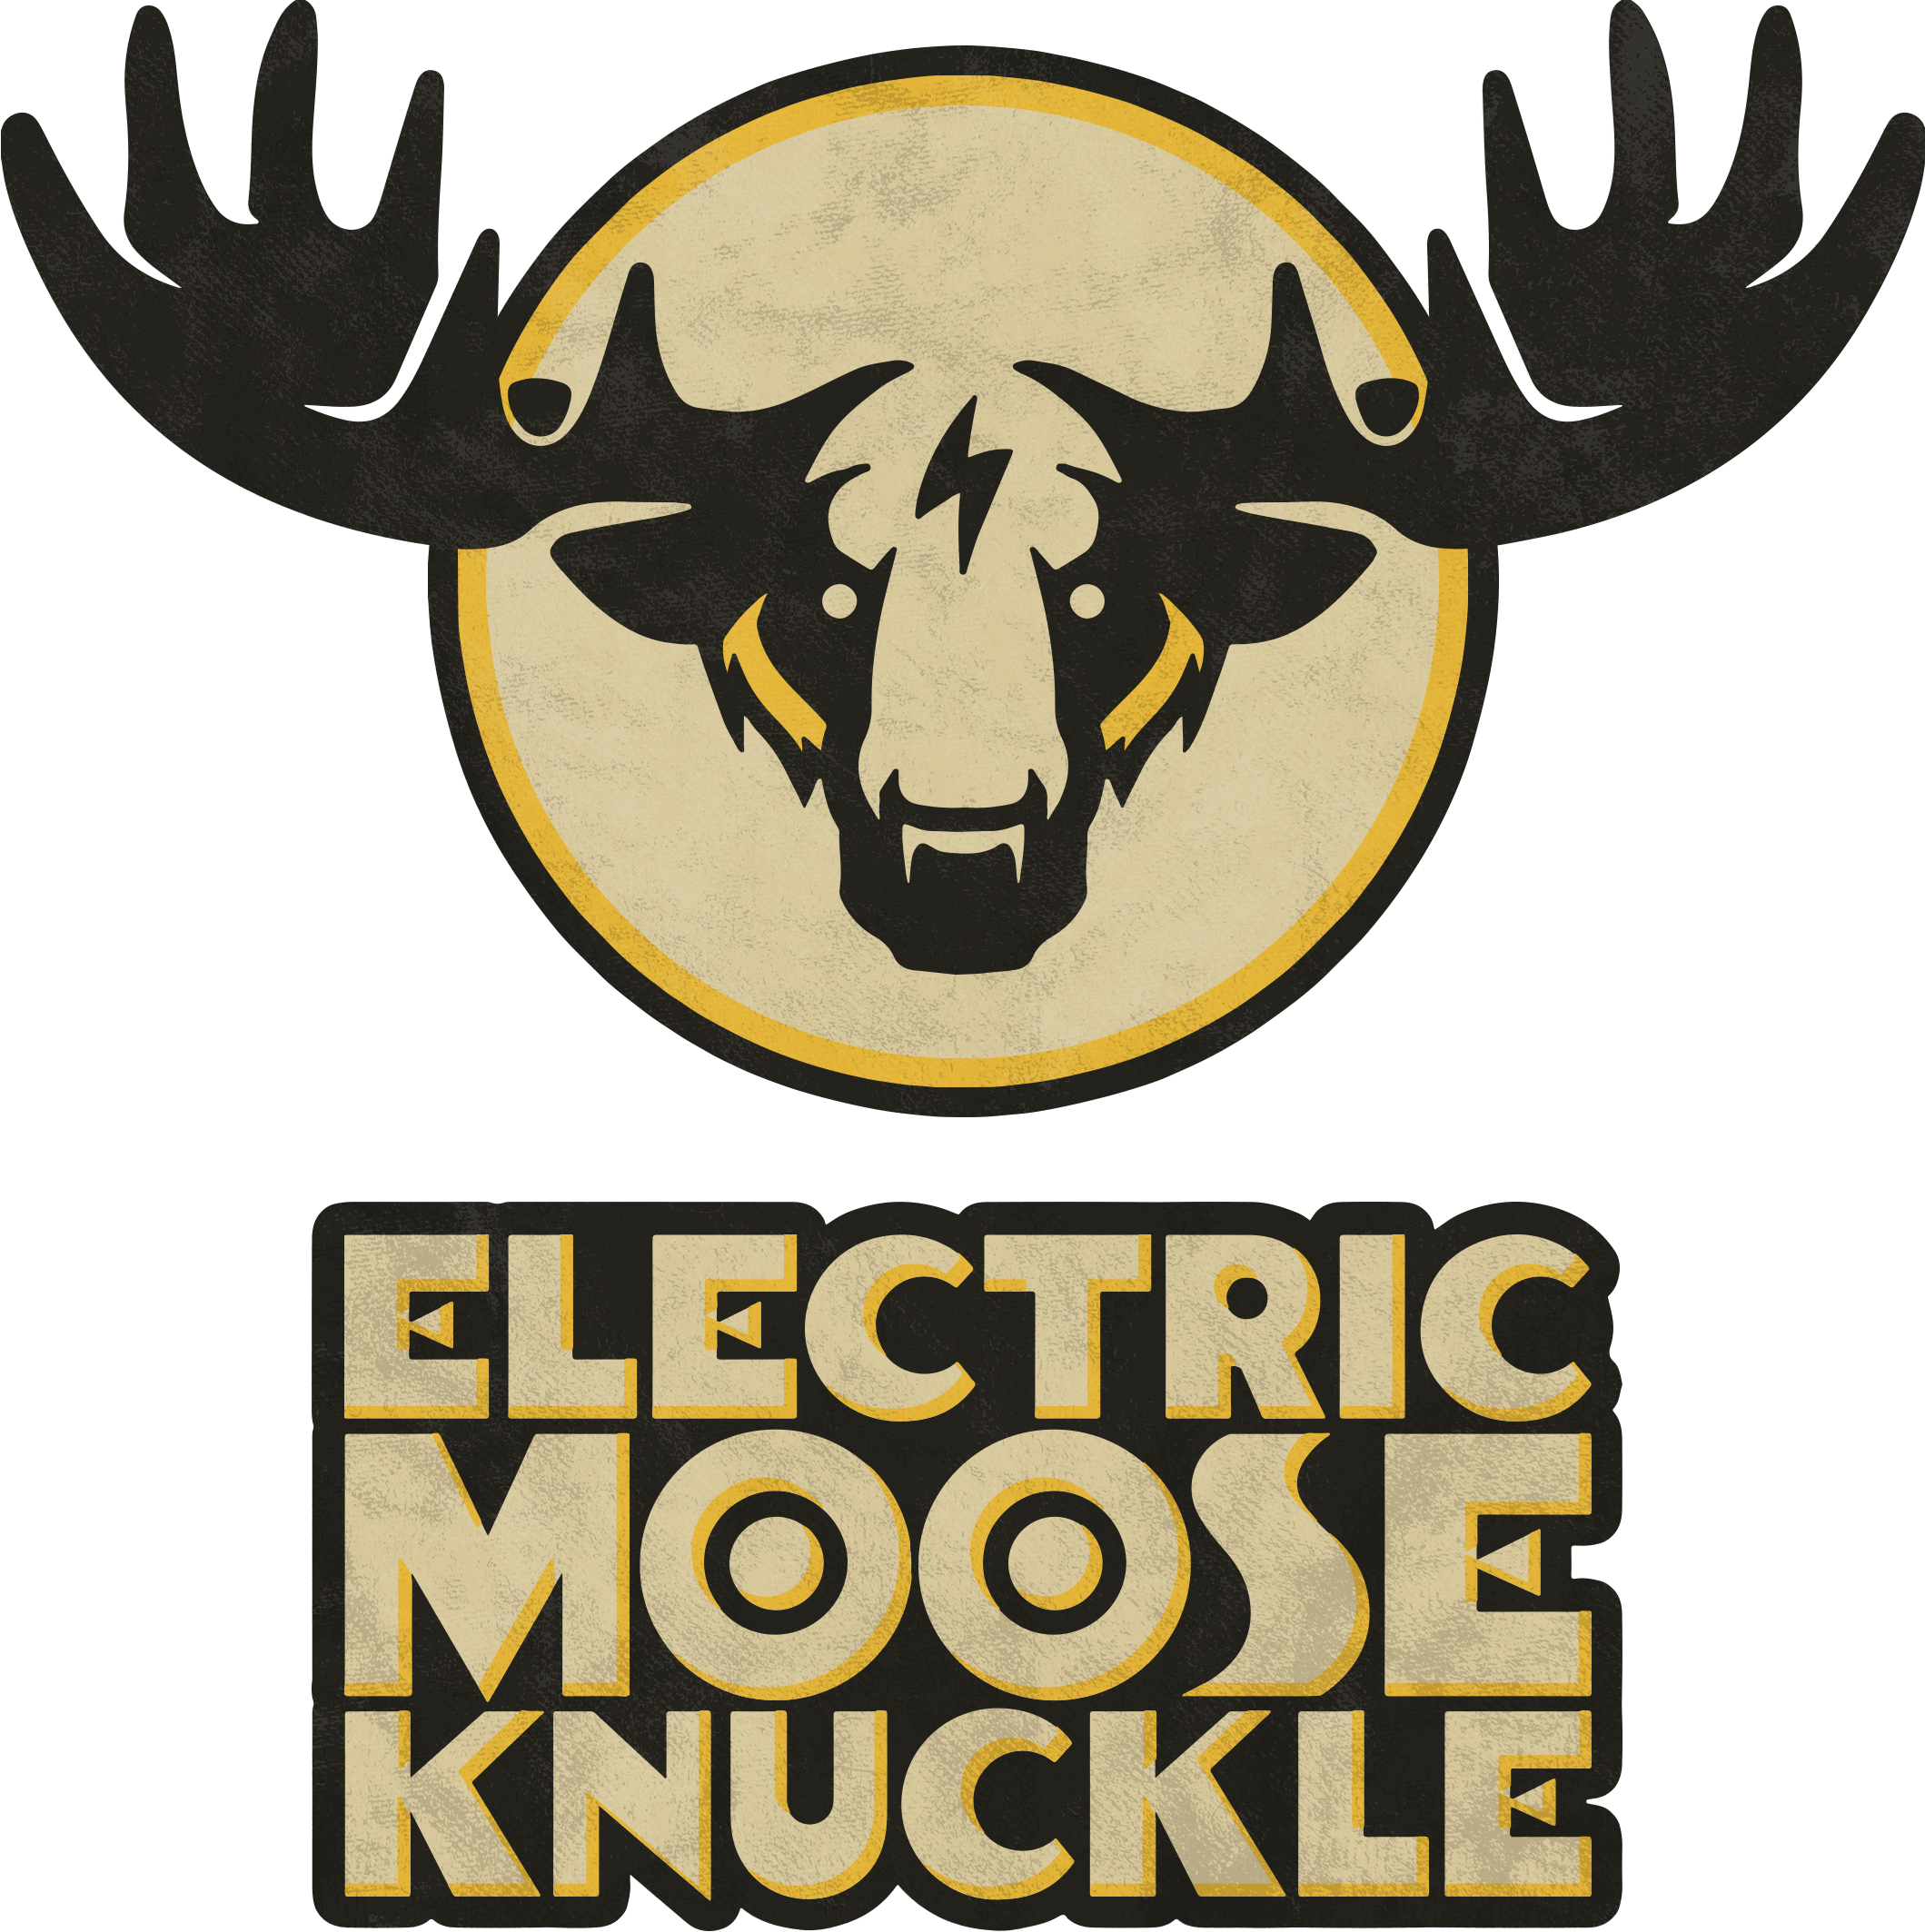 Electric Moose Knuckle